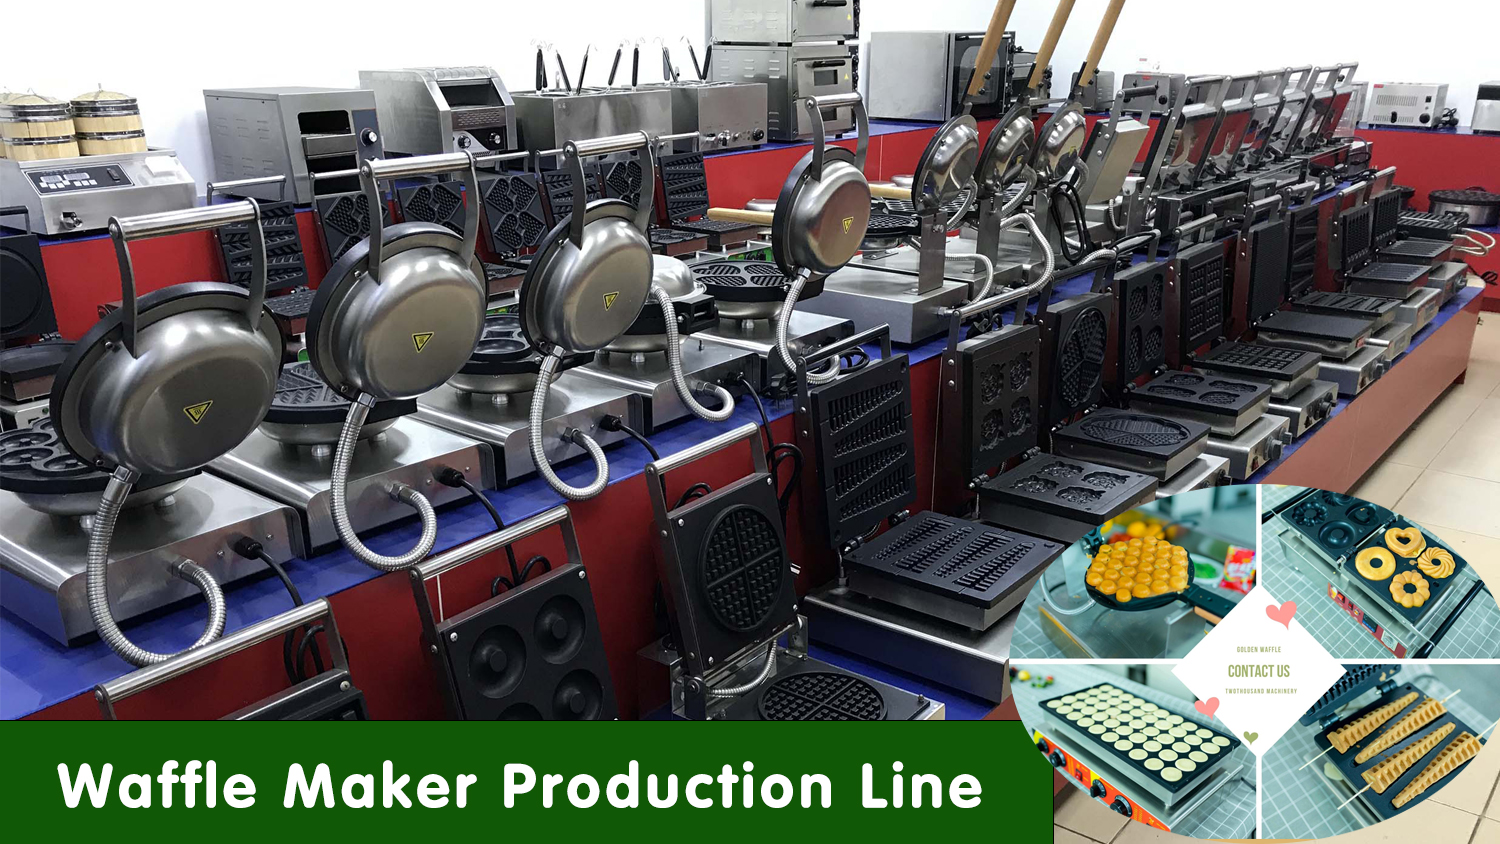 Waffle Maker Production Line